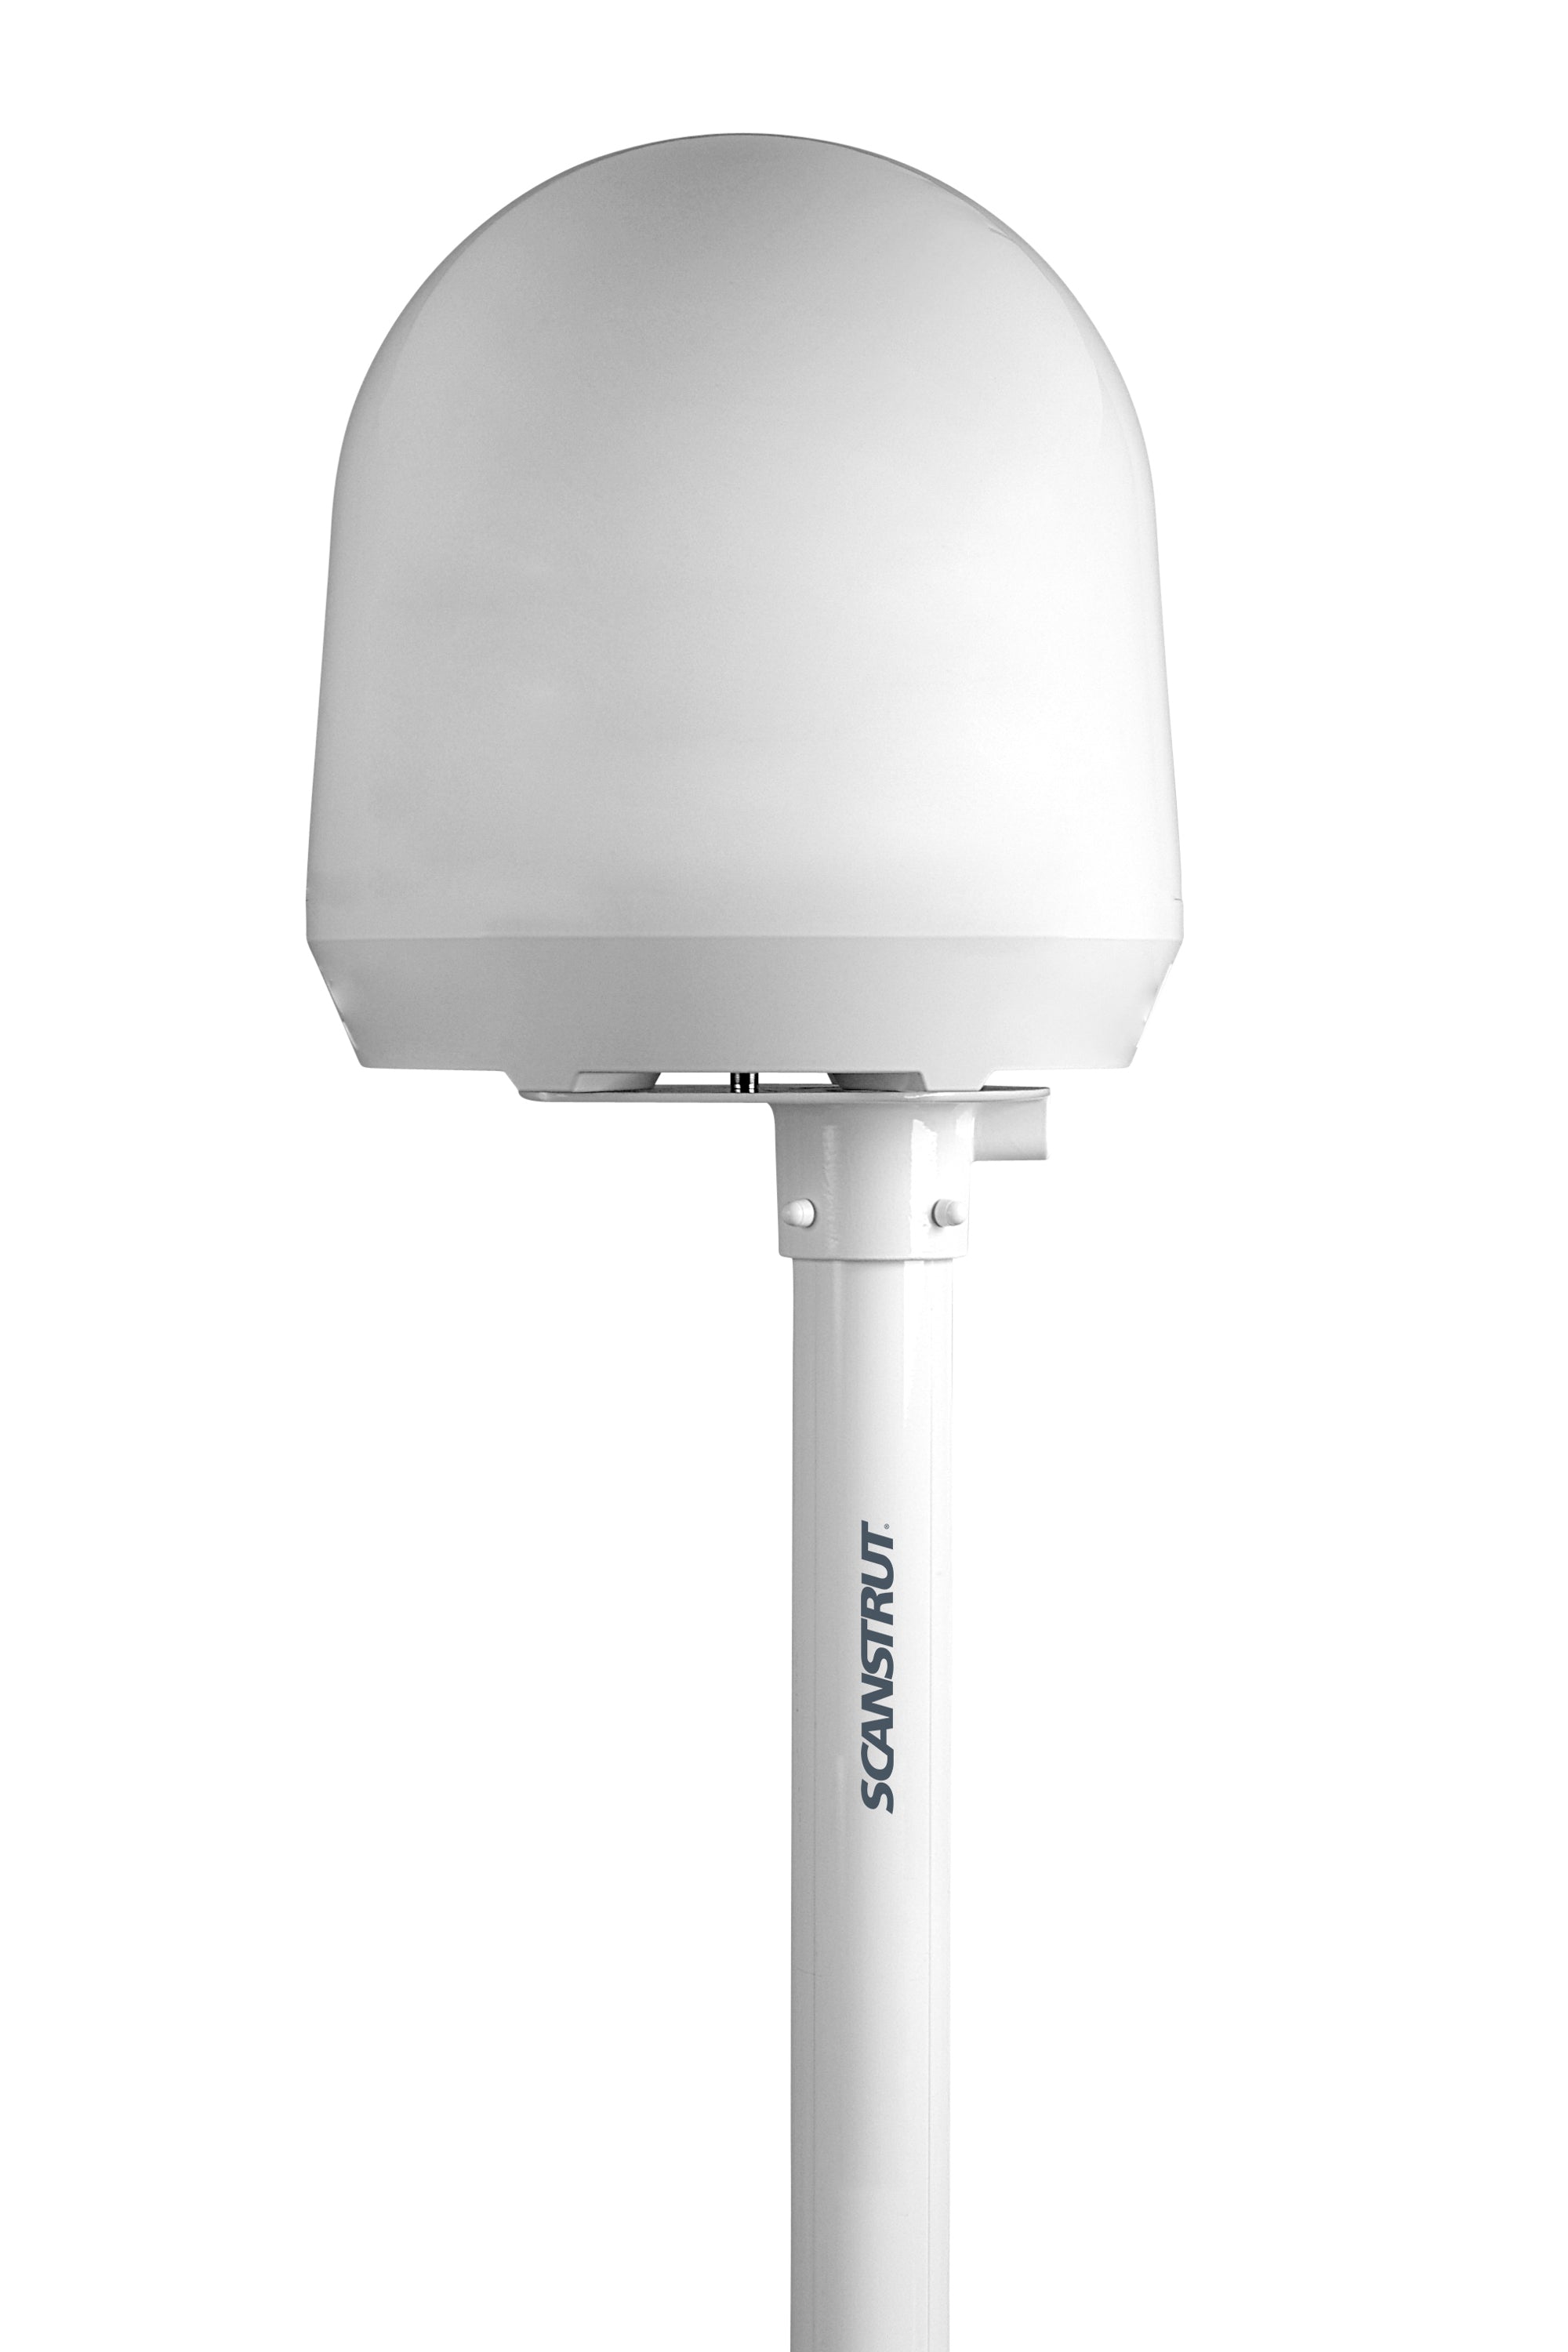 Scanstrut SC109 Satcom Pole Mount - 98" (2.5m), For Iridium Pilot Satcoms